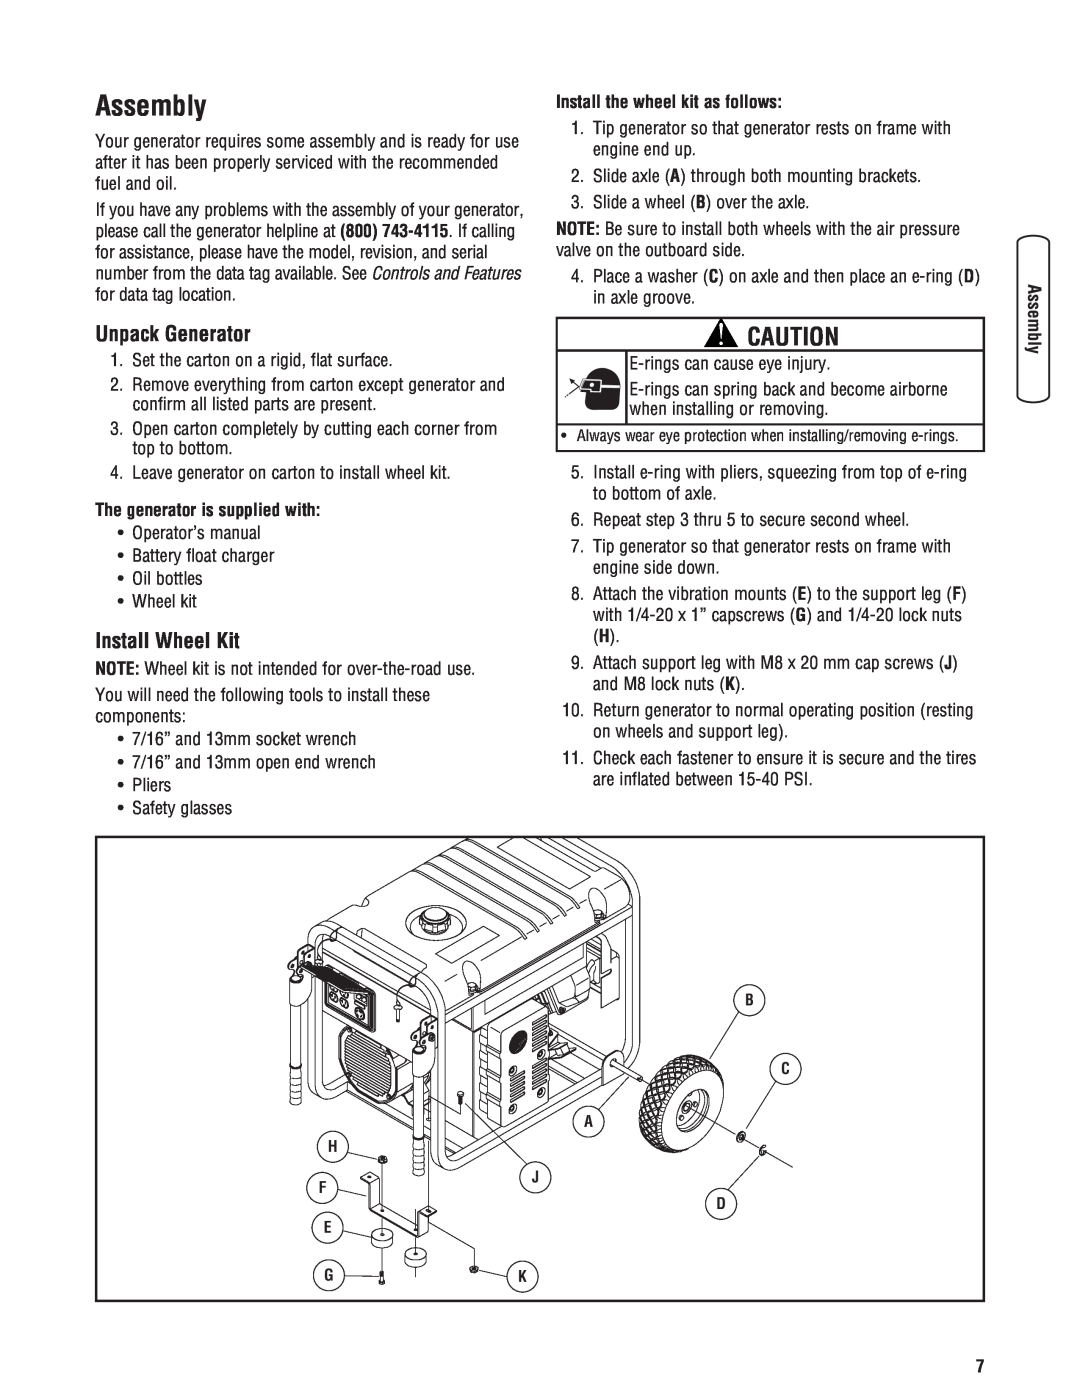 Briggs & Stratton 8000 Watt Portable Generator manual Assembly, Unpack Generator, Install Wheel Kit 